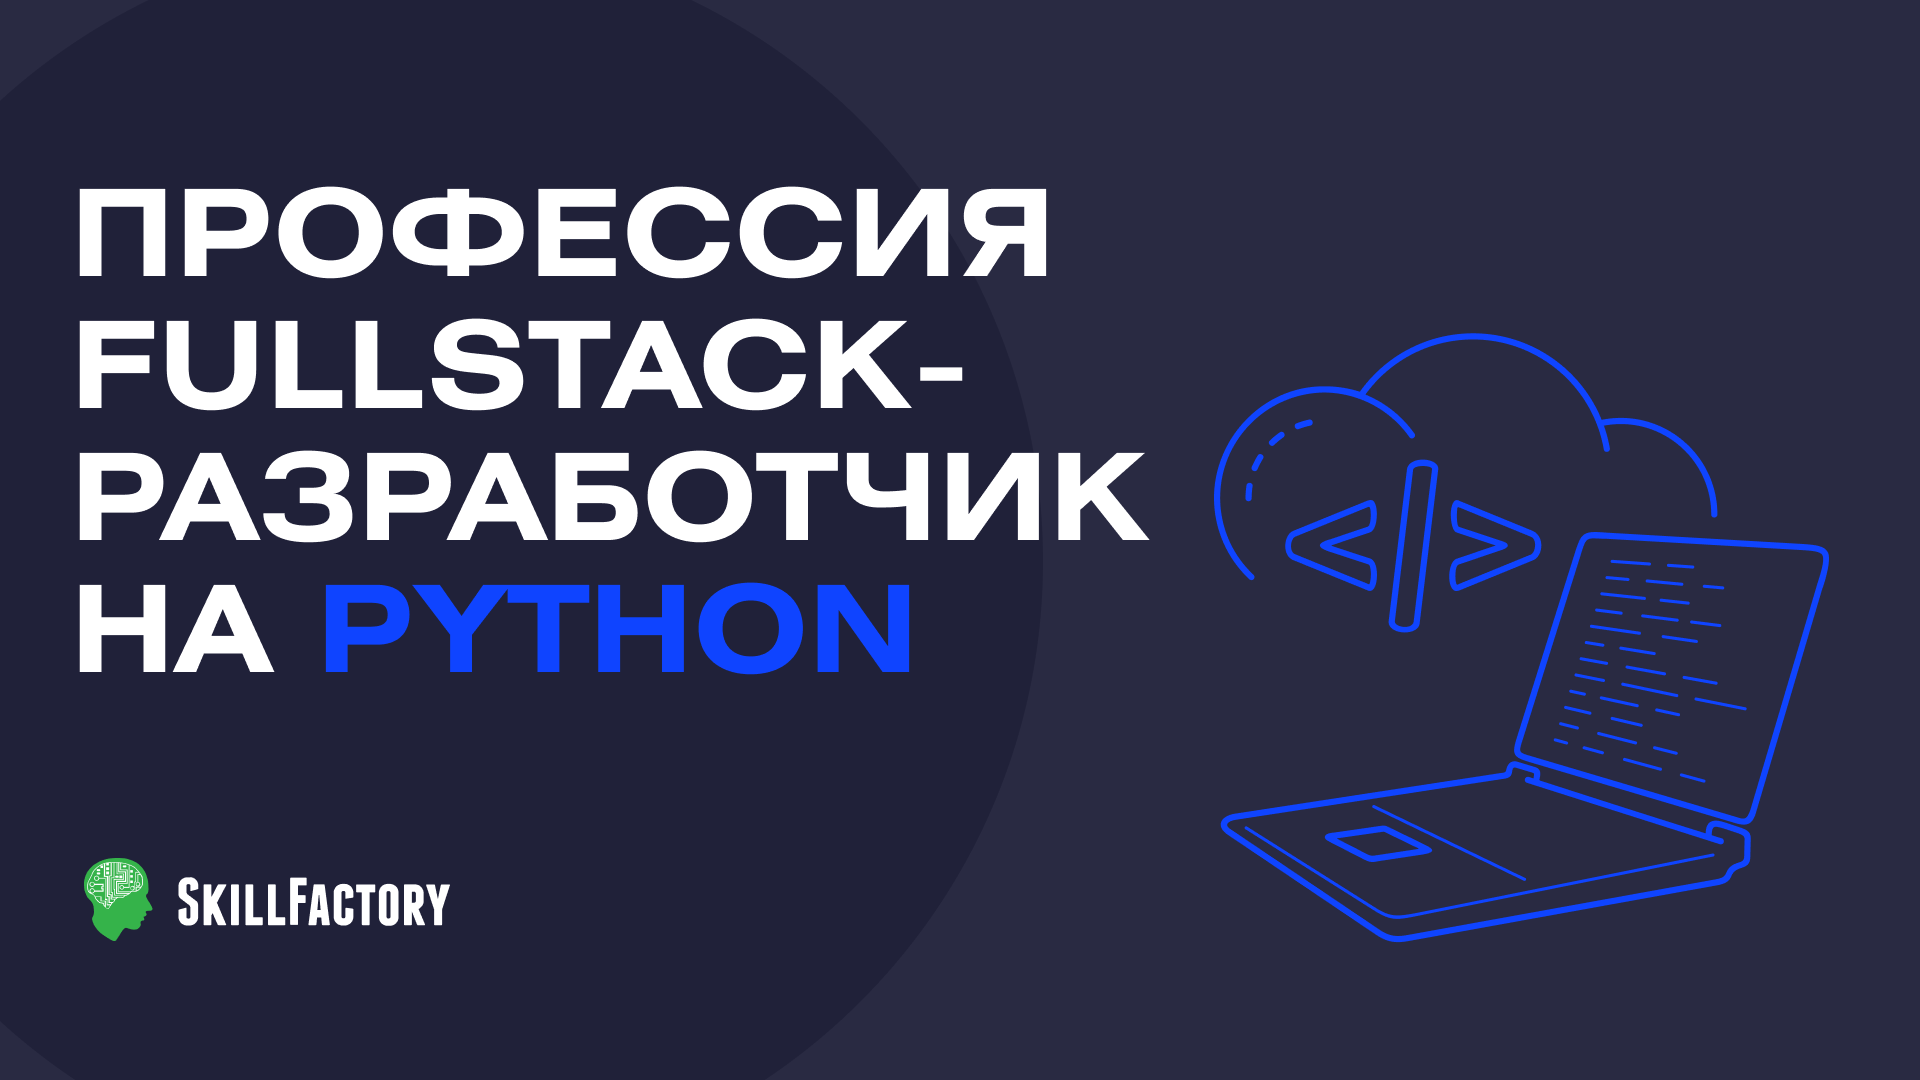 Профессия Fullstack-разработчик на Python профессия python разработчик